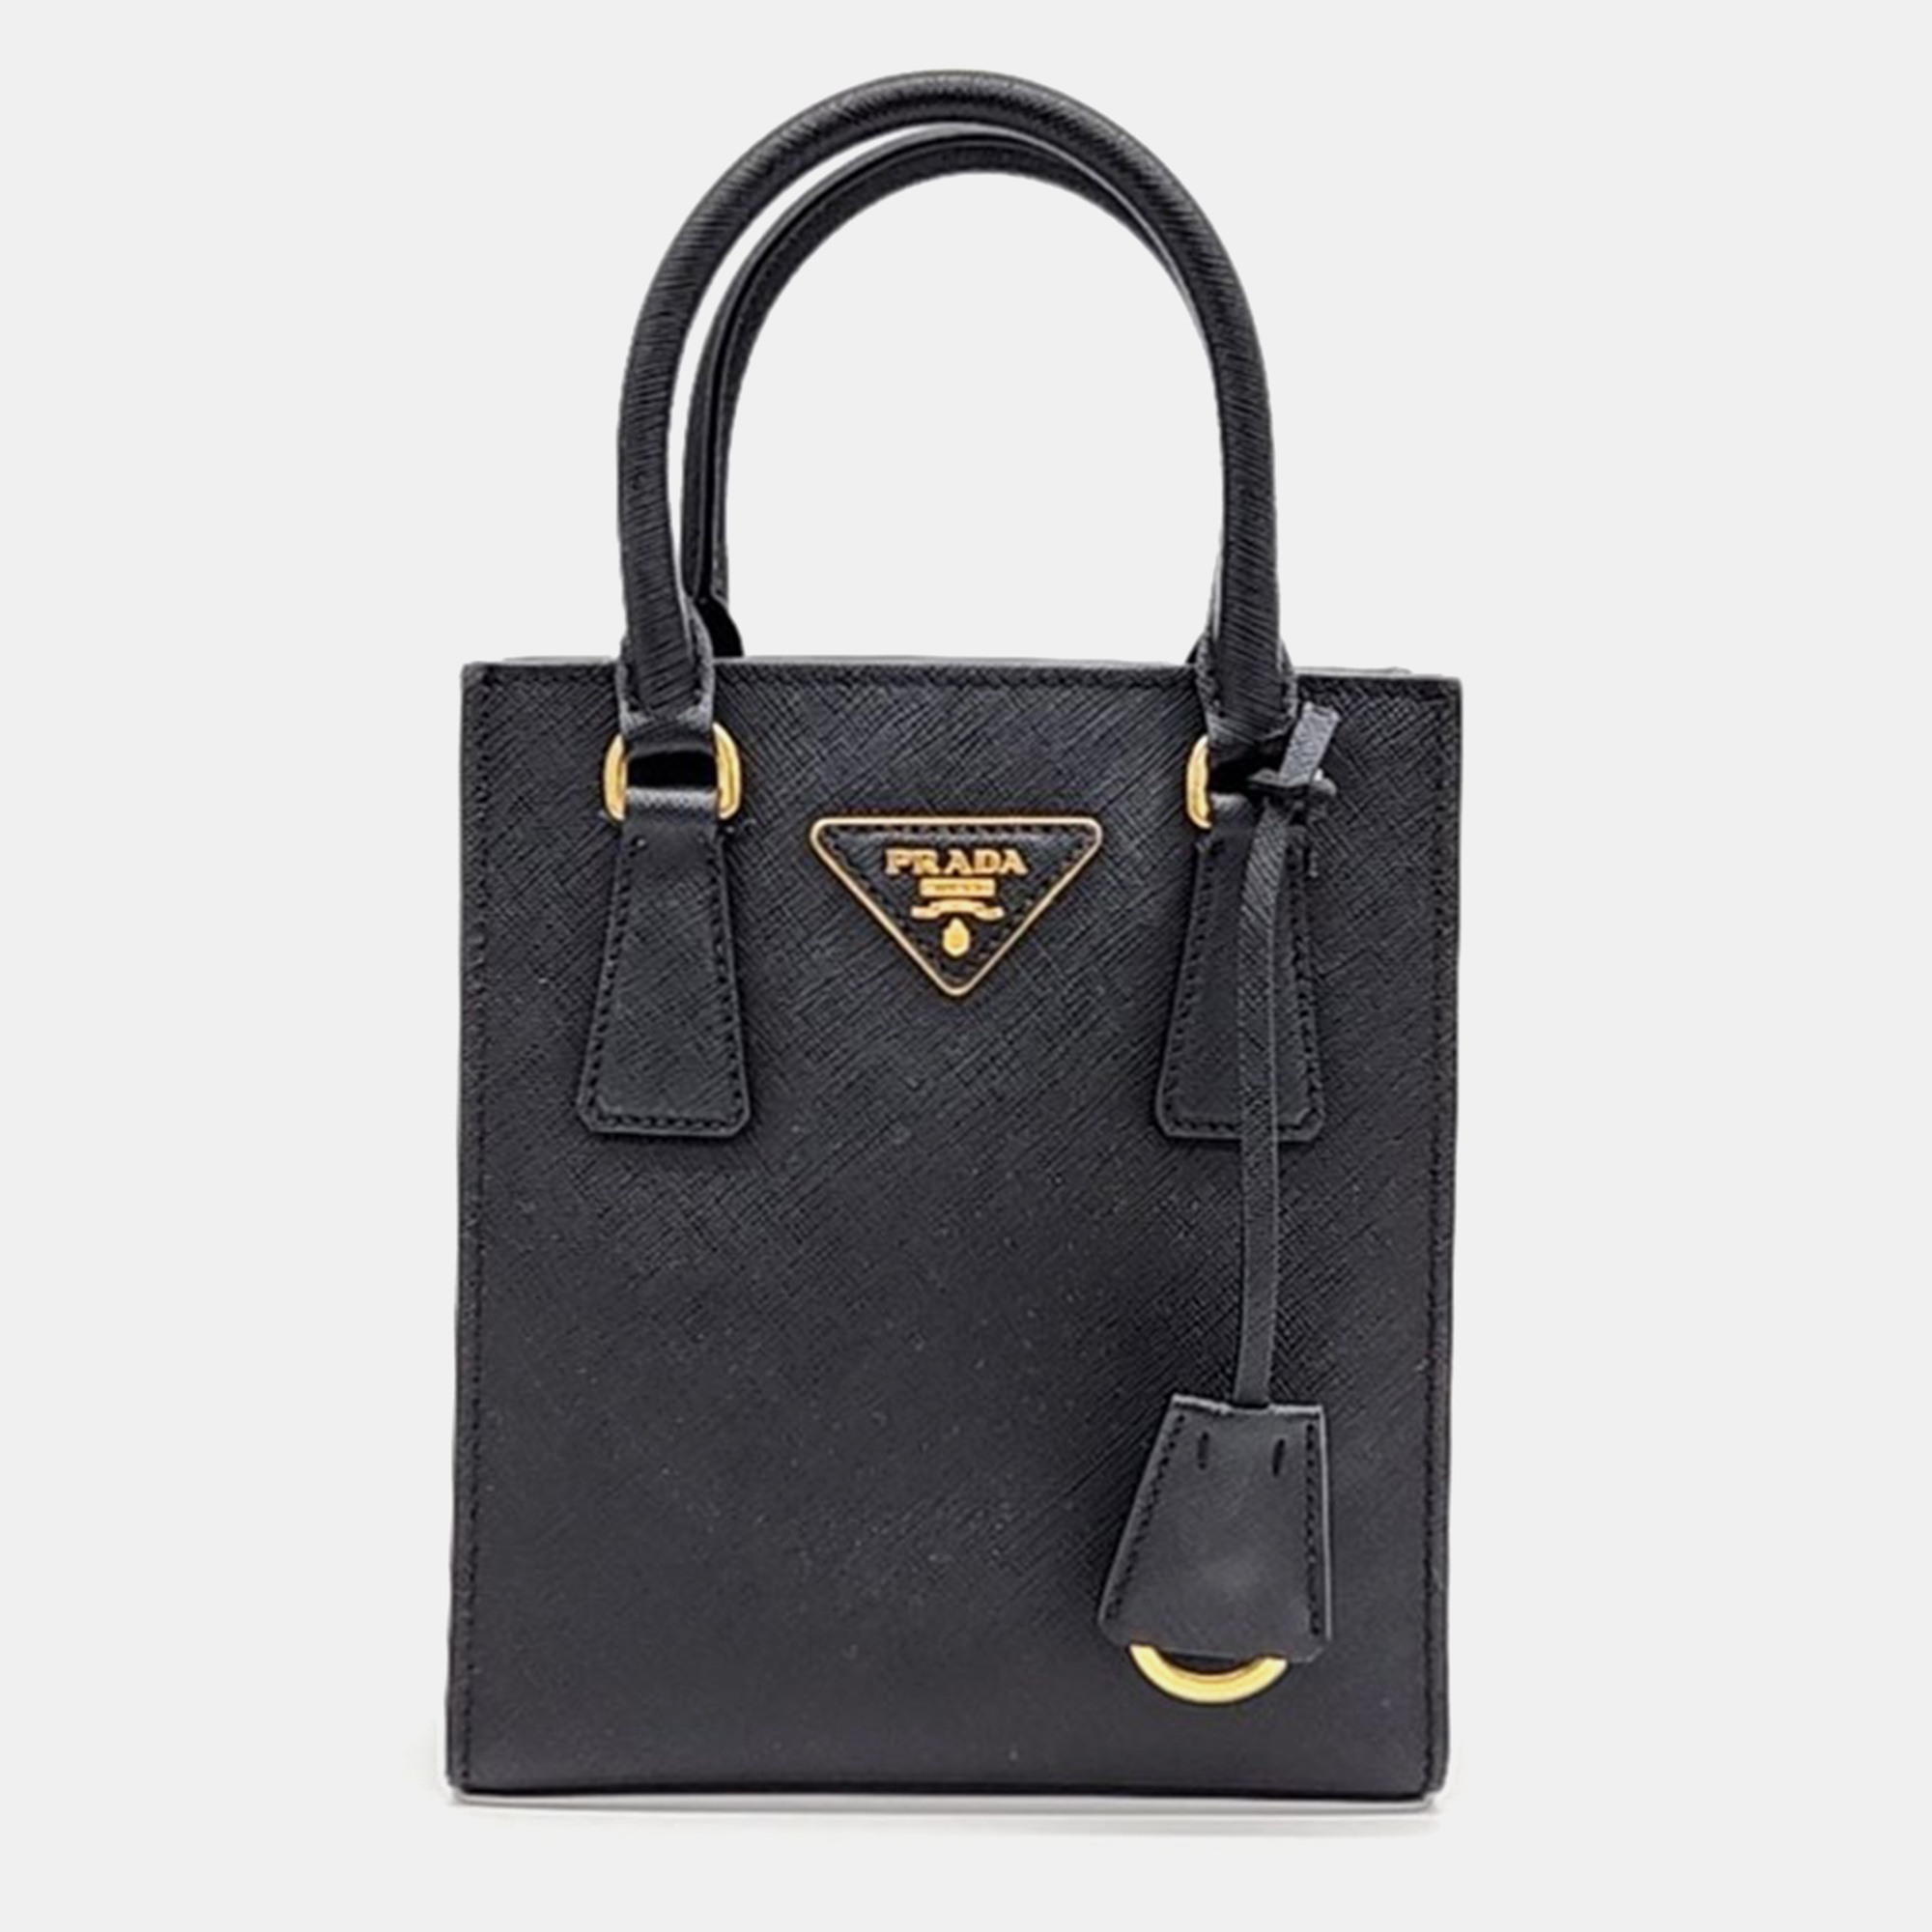 Prada hermes black saffiano leather lux crossbody bag